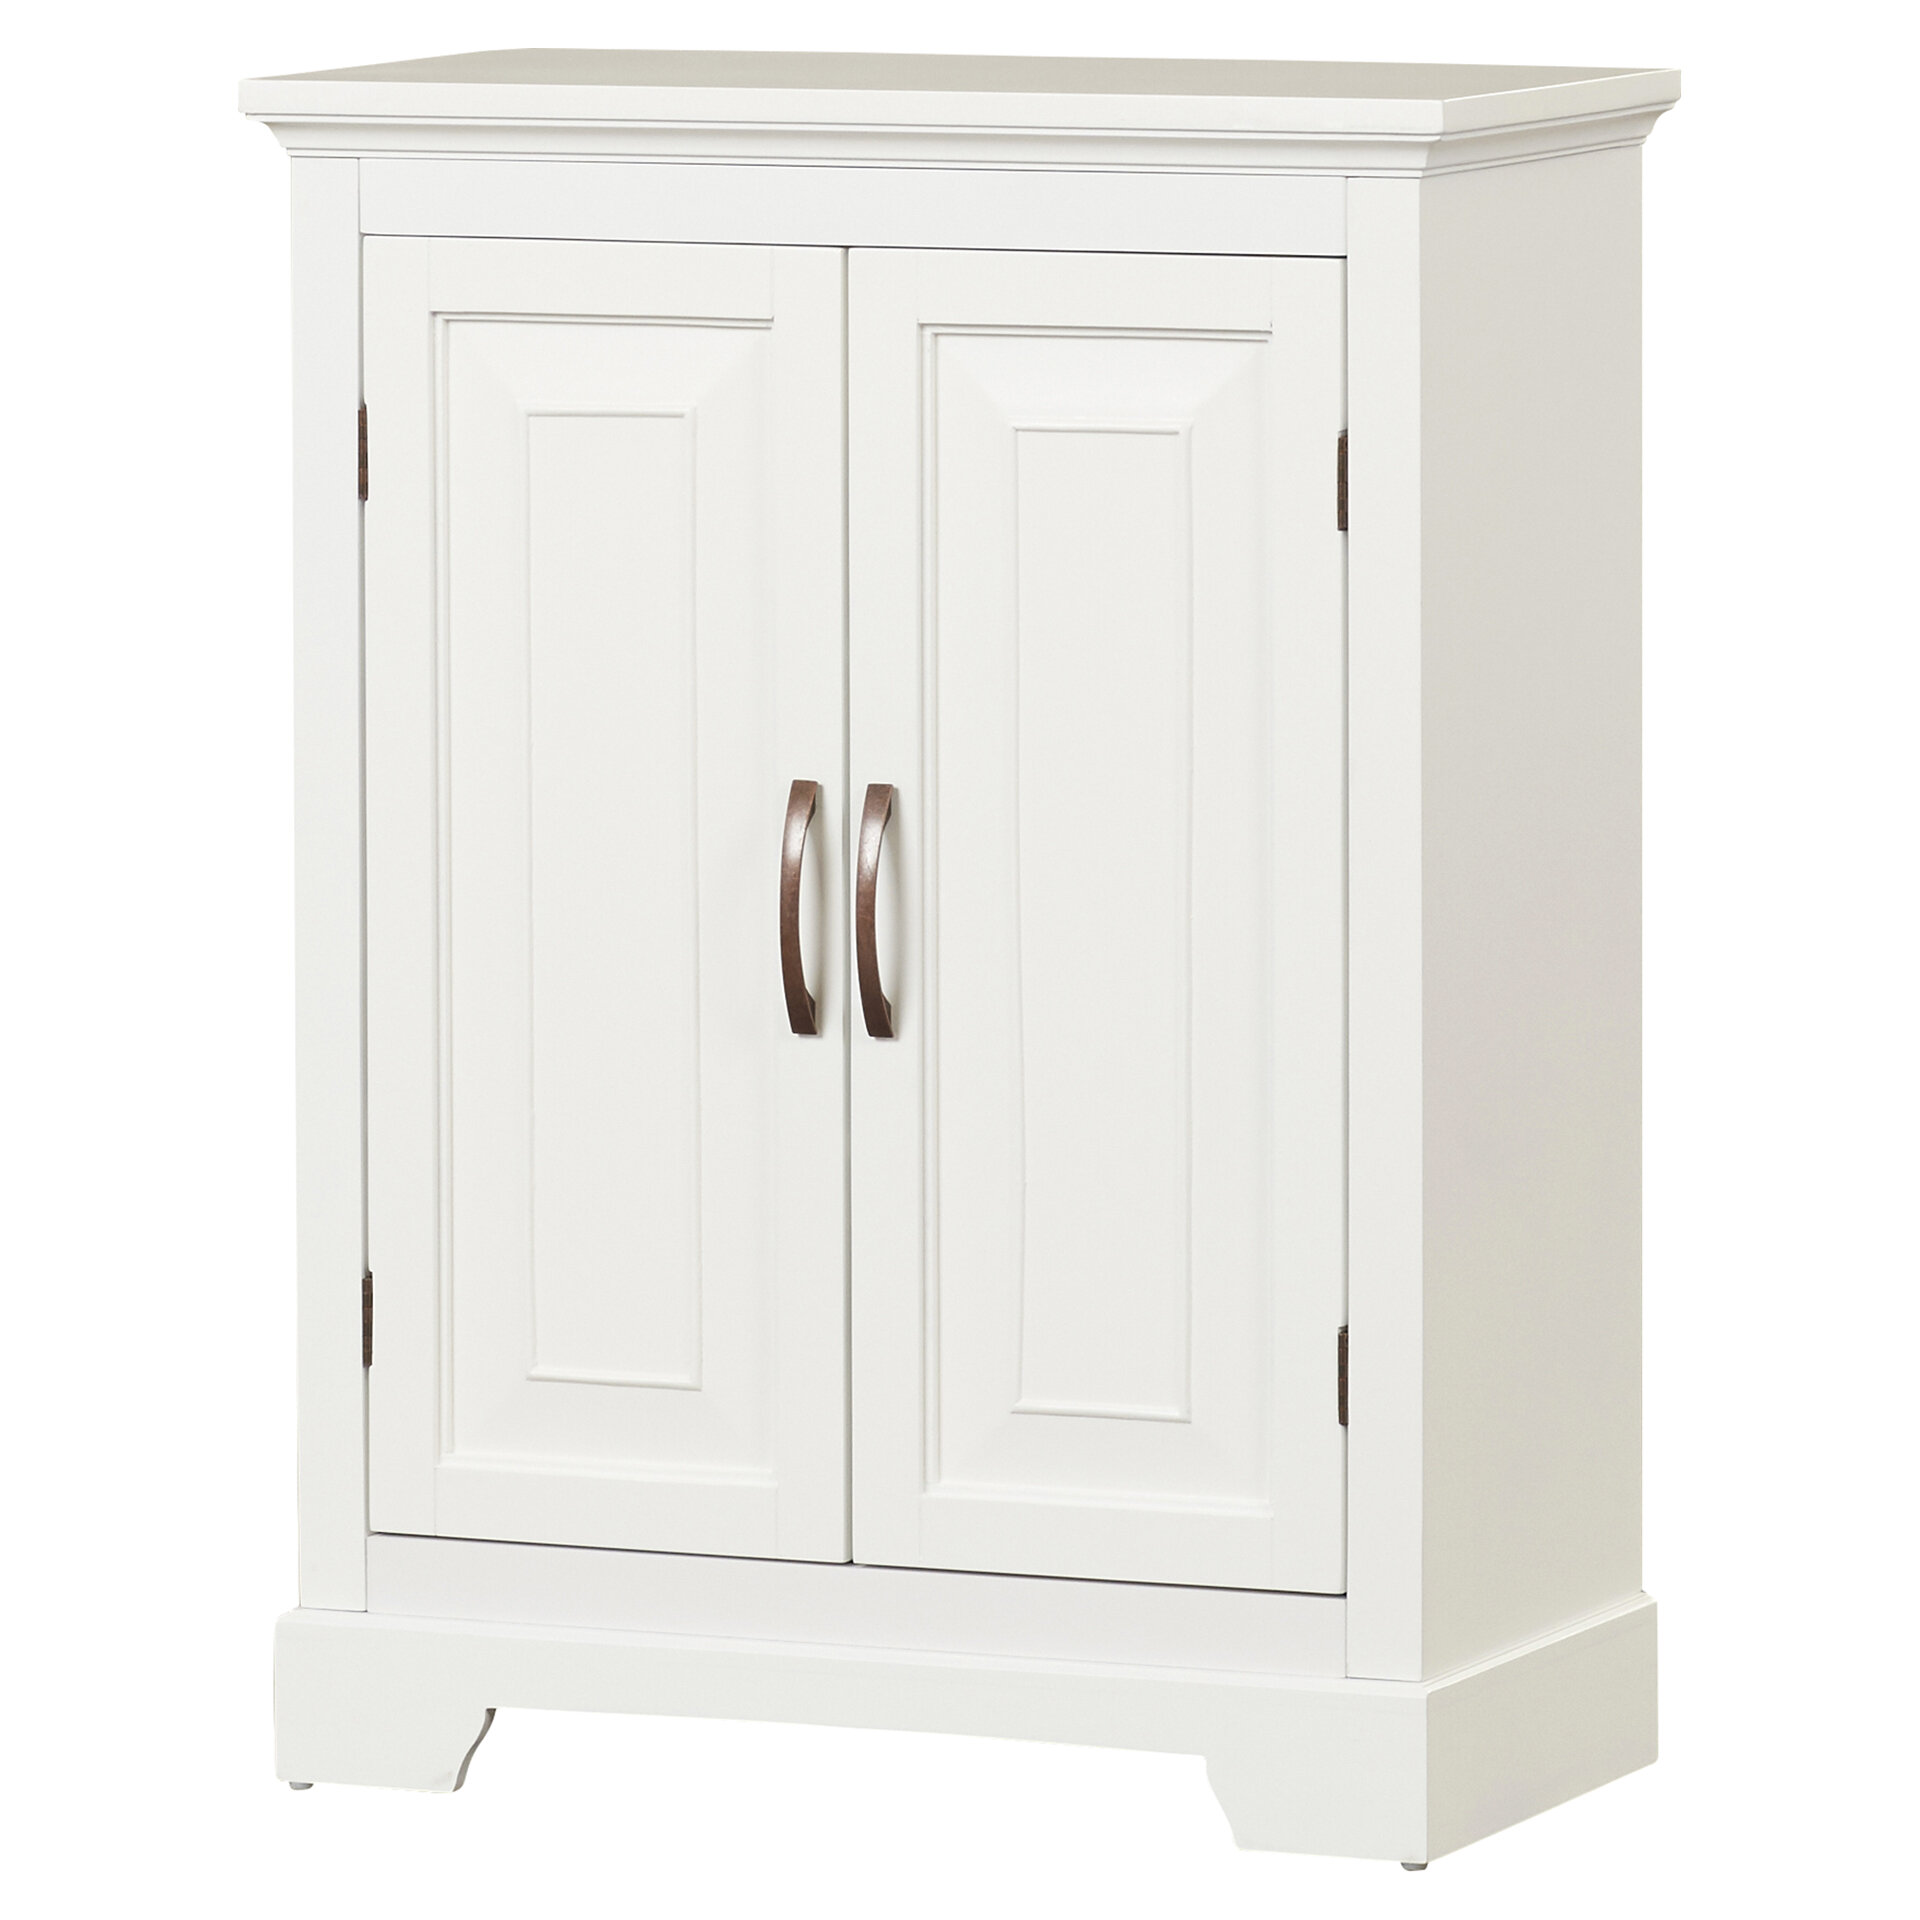 Arapahoe 24 W X 32 H Free Standing Bathroom Cabinet Reviews